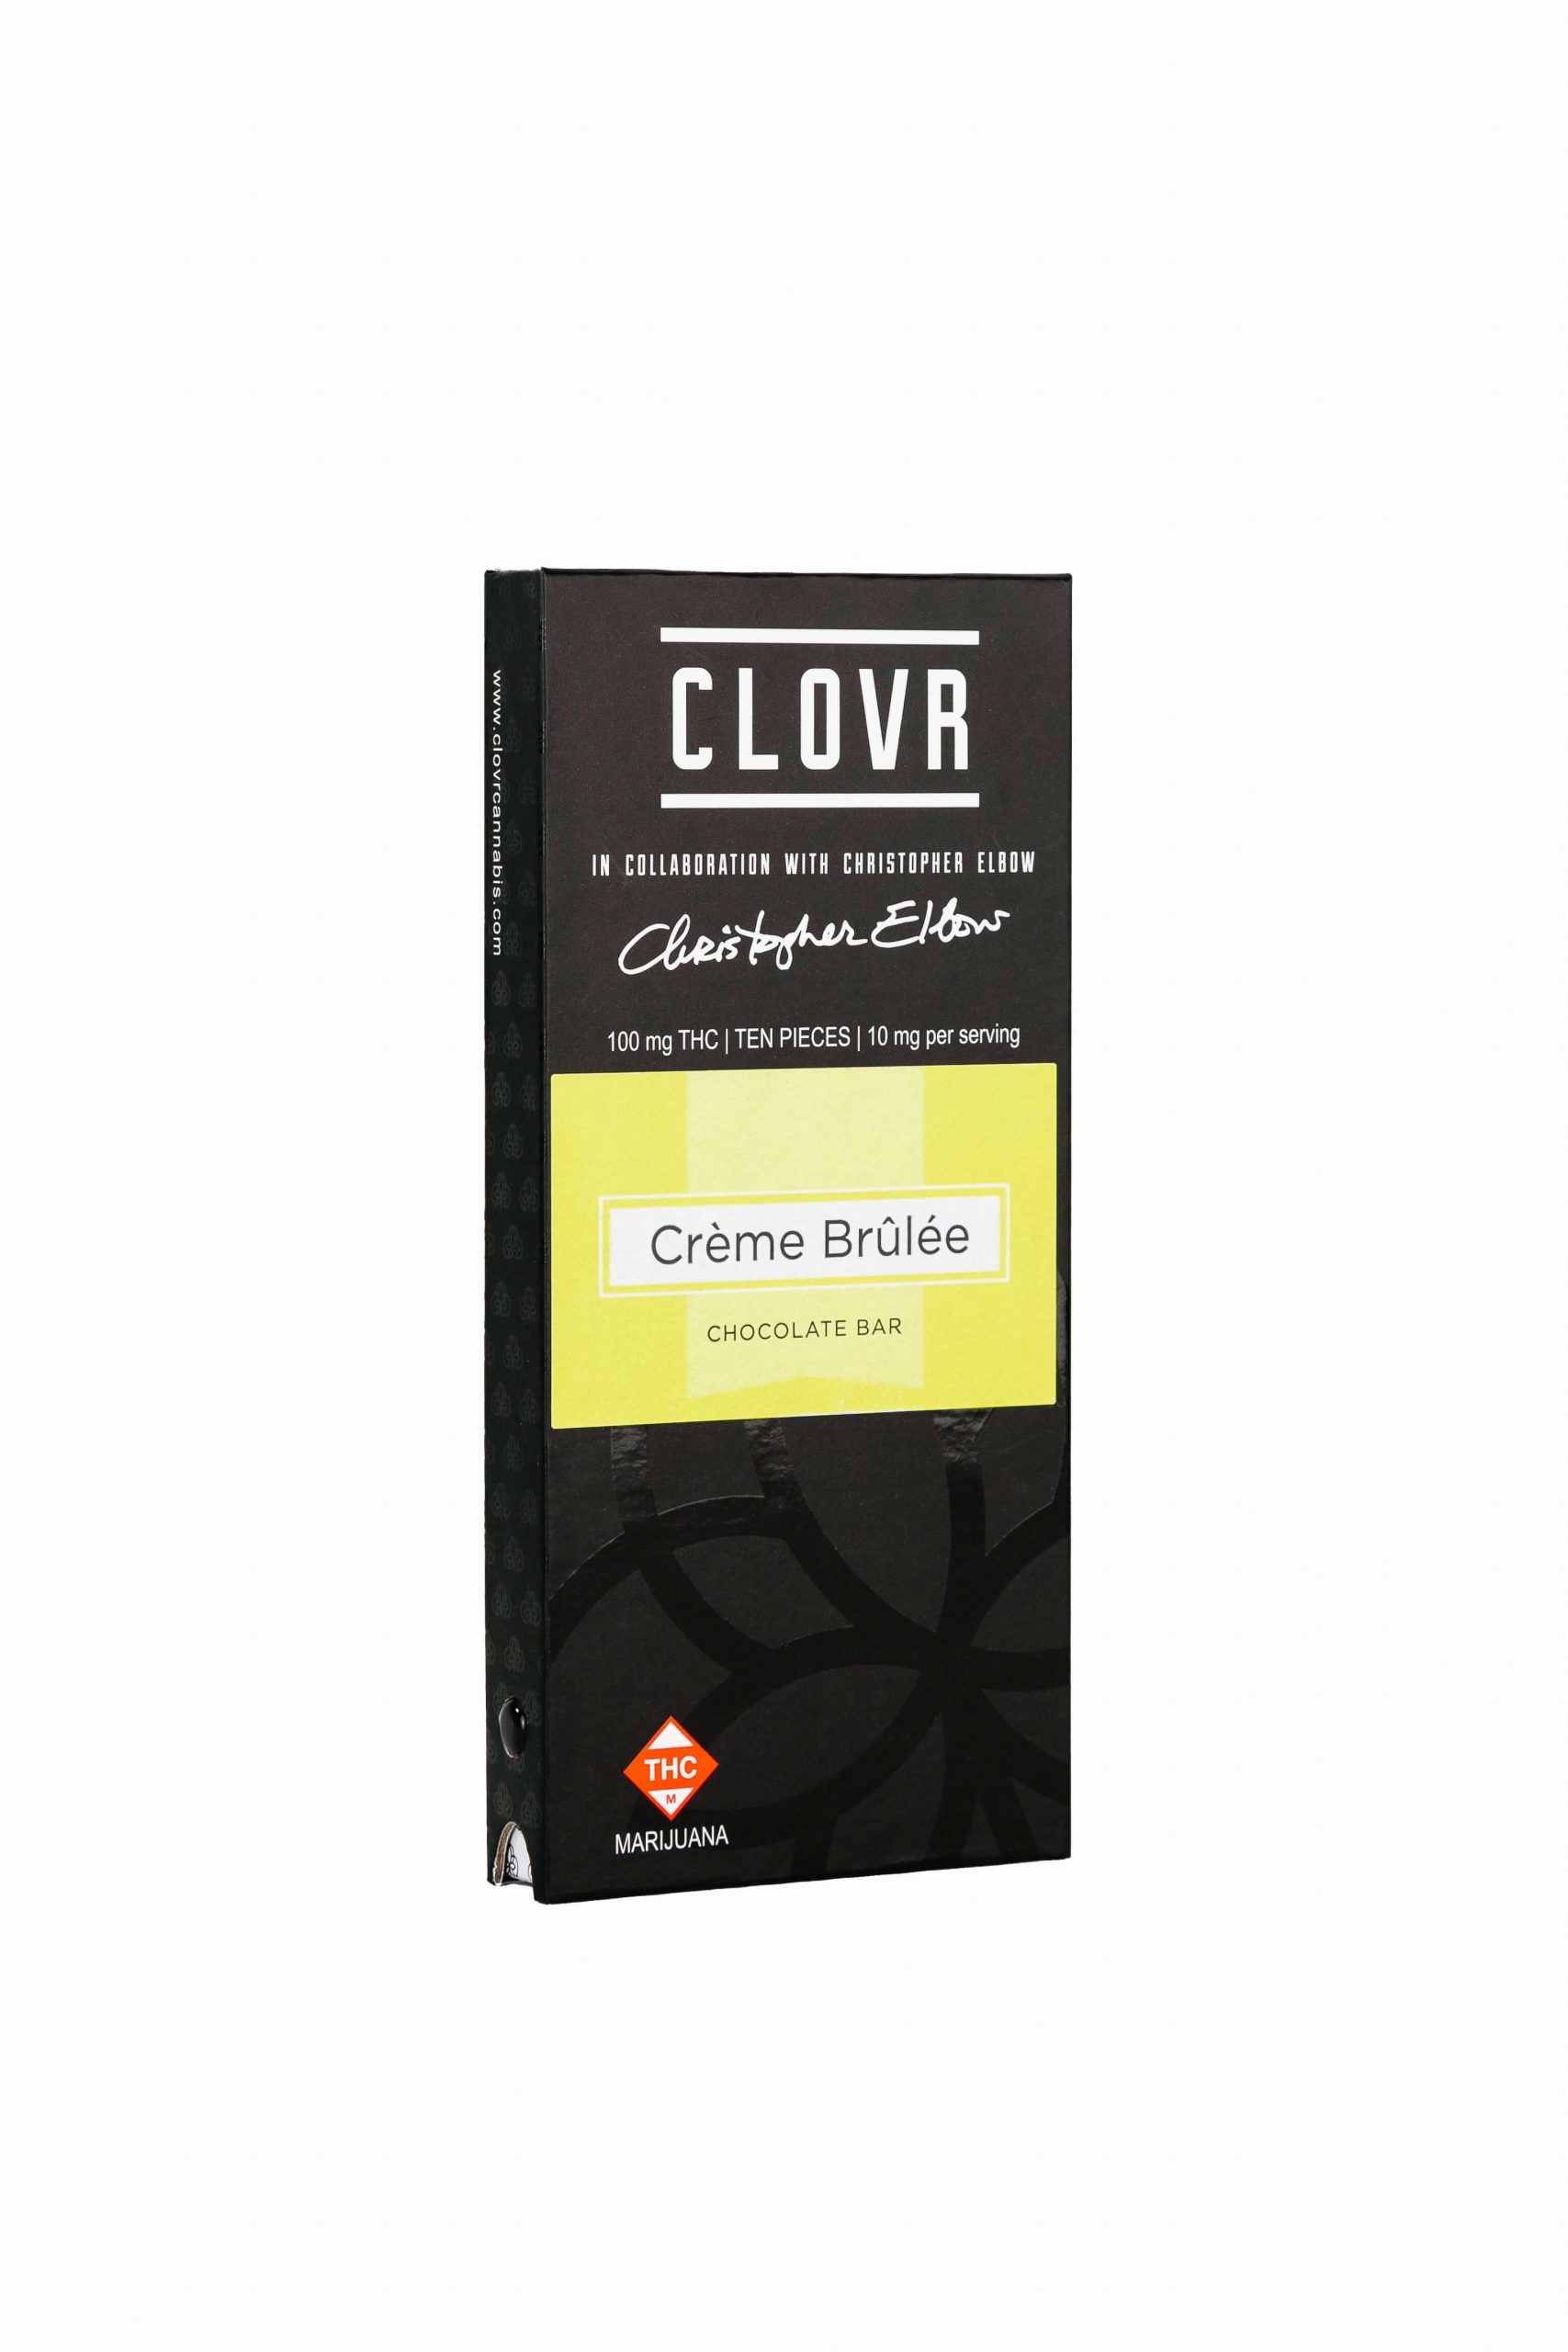 christopher elbow marijuana creme brulee chocolate bar